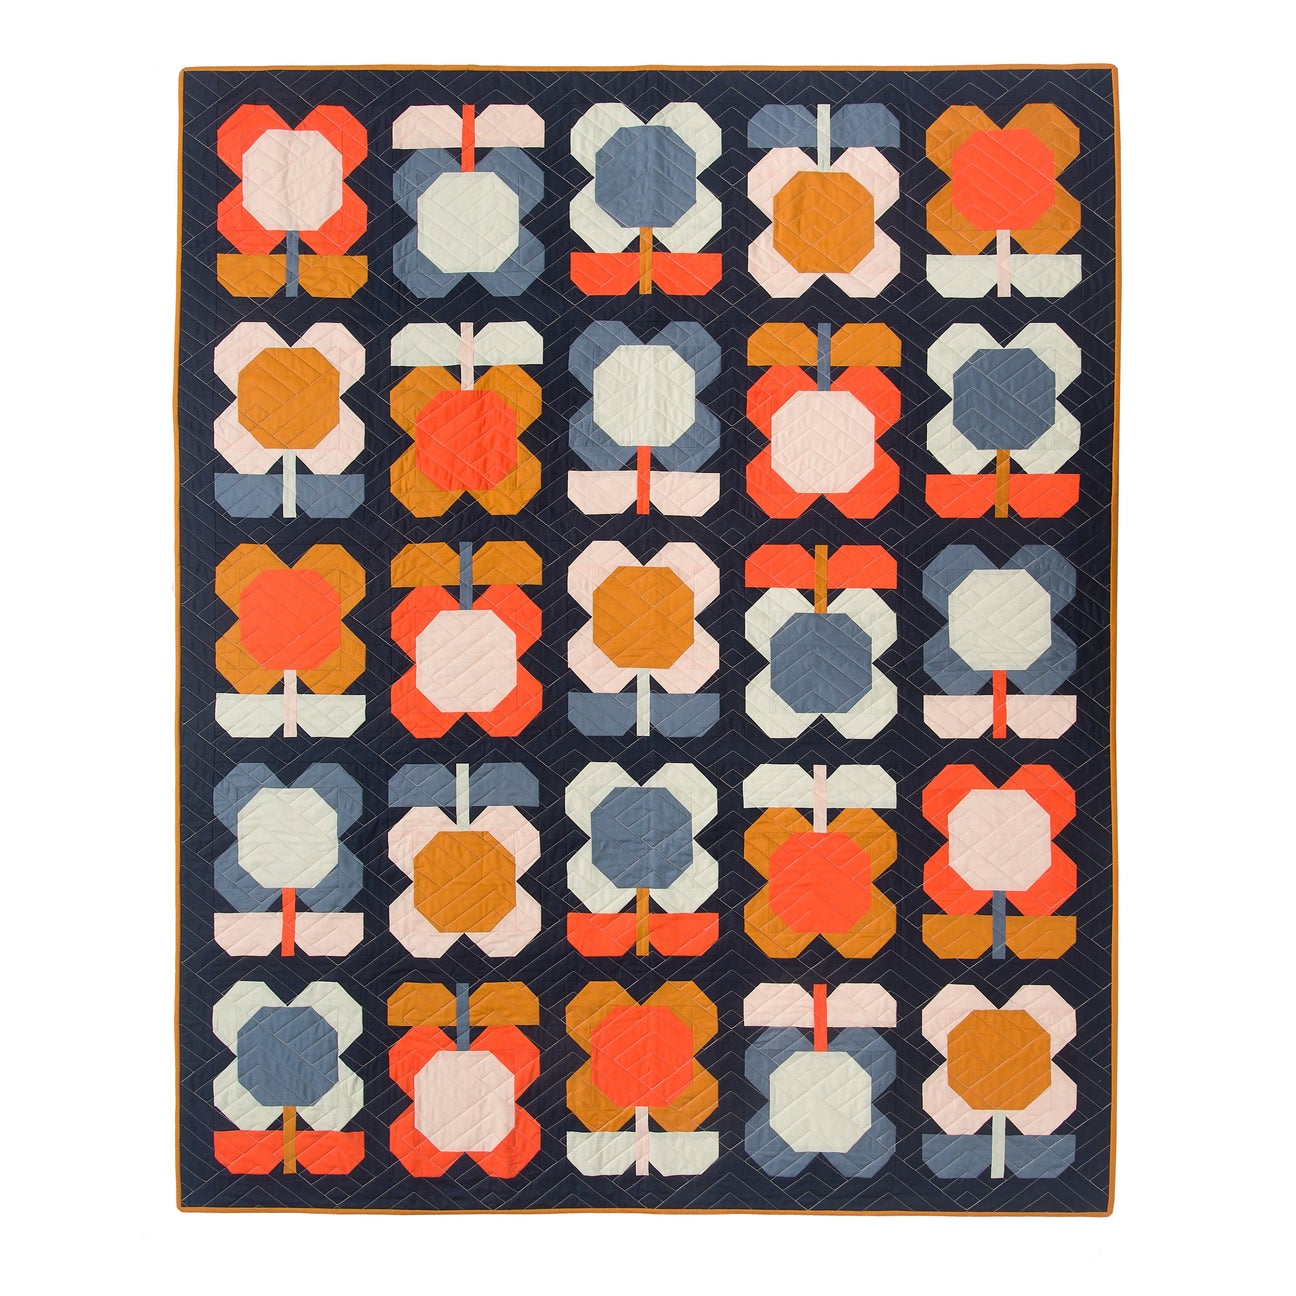 Folk Blooms Quilt Pattern - Pen + Paper Patterns